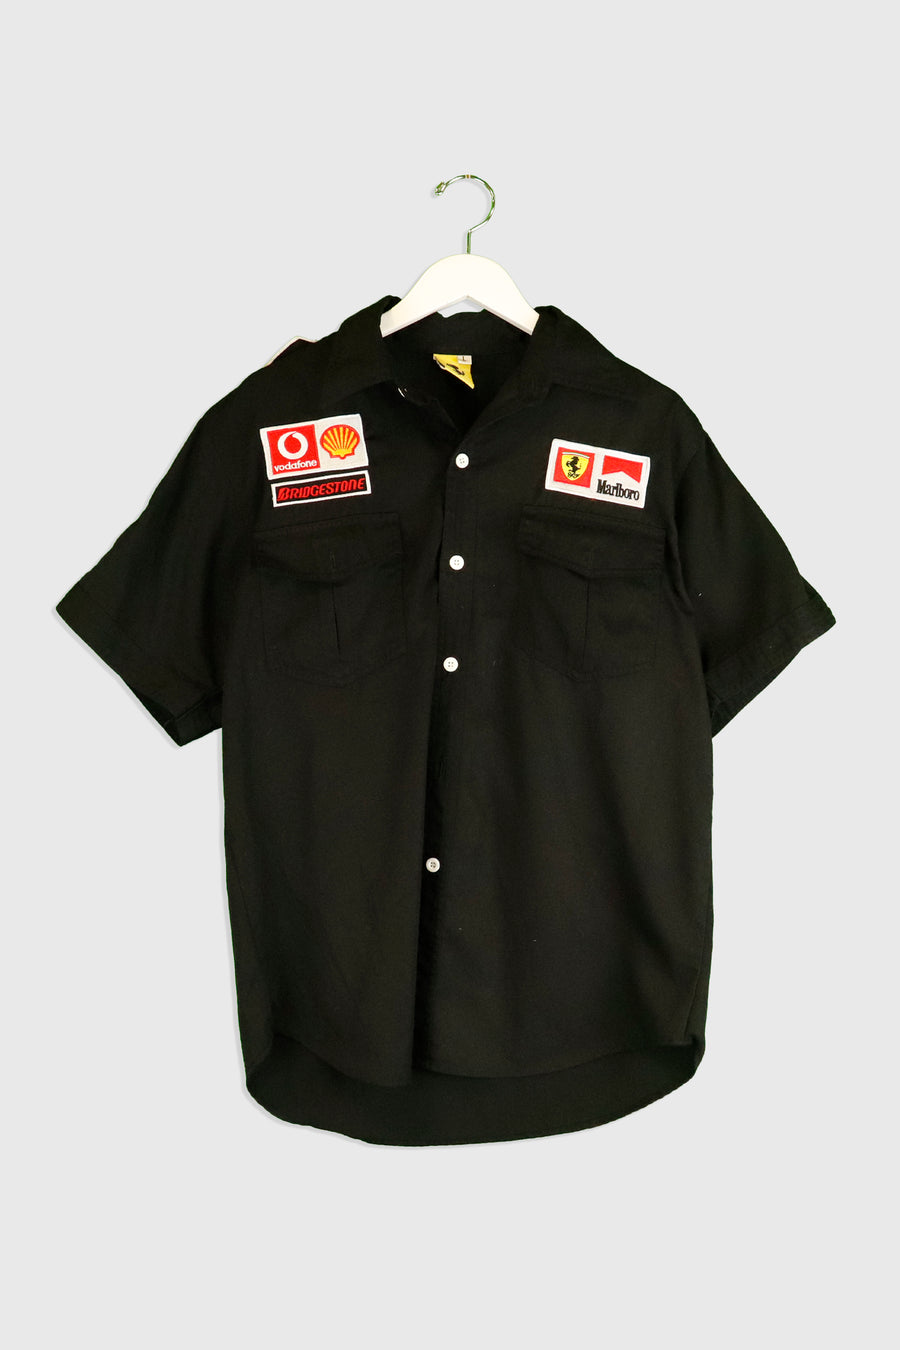 Vintage Ferrari Sponsor Button Up Collared T Shirt Sz L